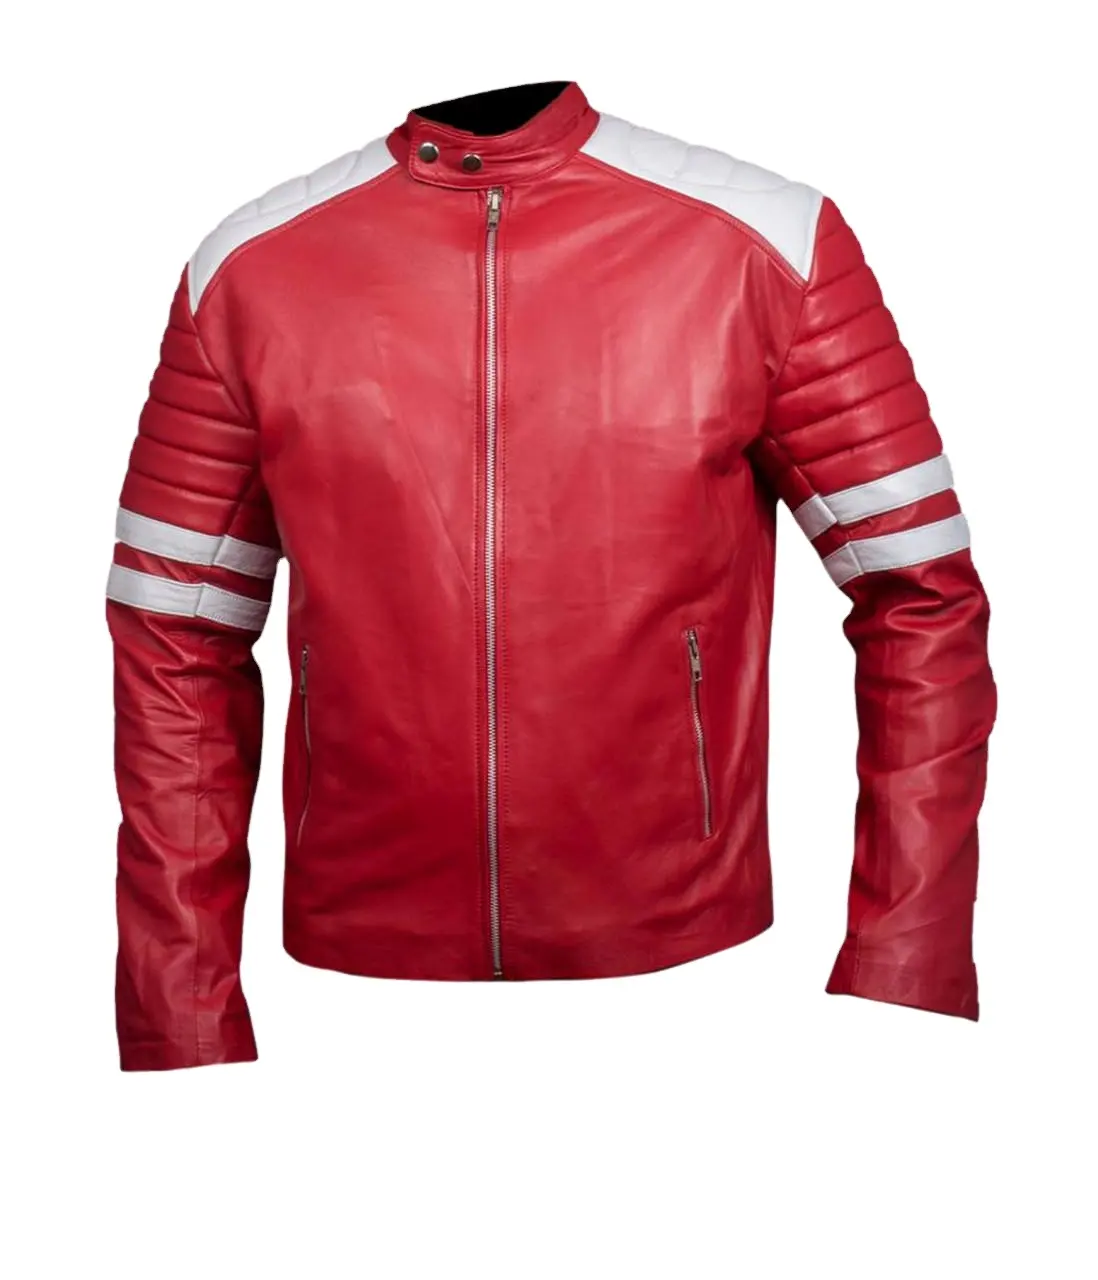 Top notch Fight Club Durden Mayhem Leather Jacket in Red Retro Biker Jacket for Men